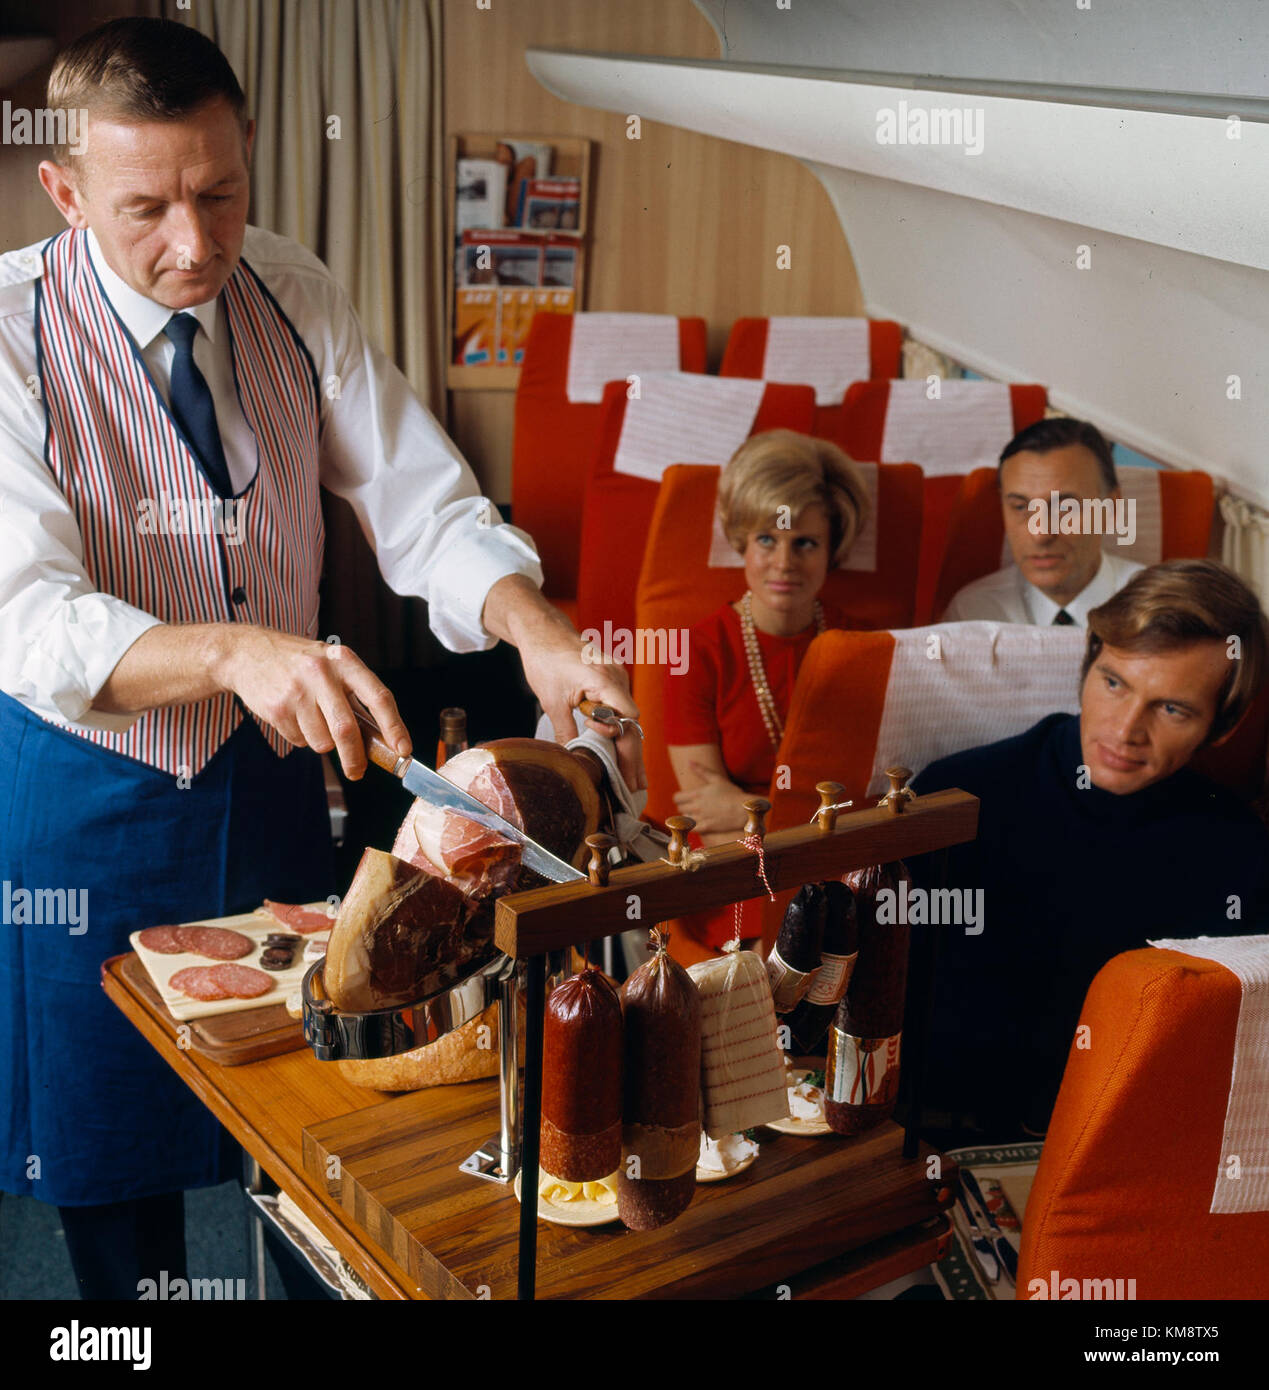 SAS DC 8 33. Innenraum der Kabine. Service an Bord, Steward serviert Buffet im skandinavischen Landhausstil Stockfoto